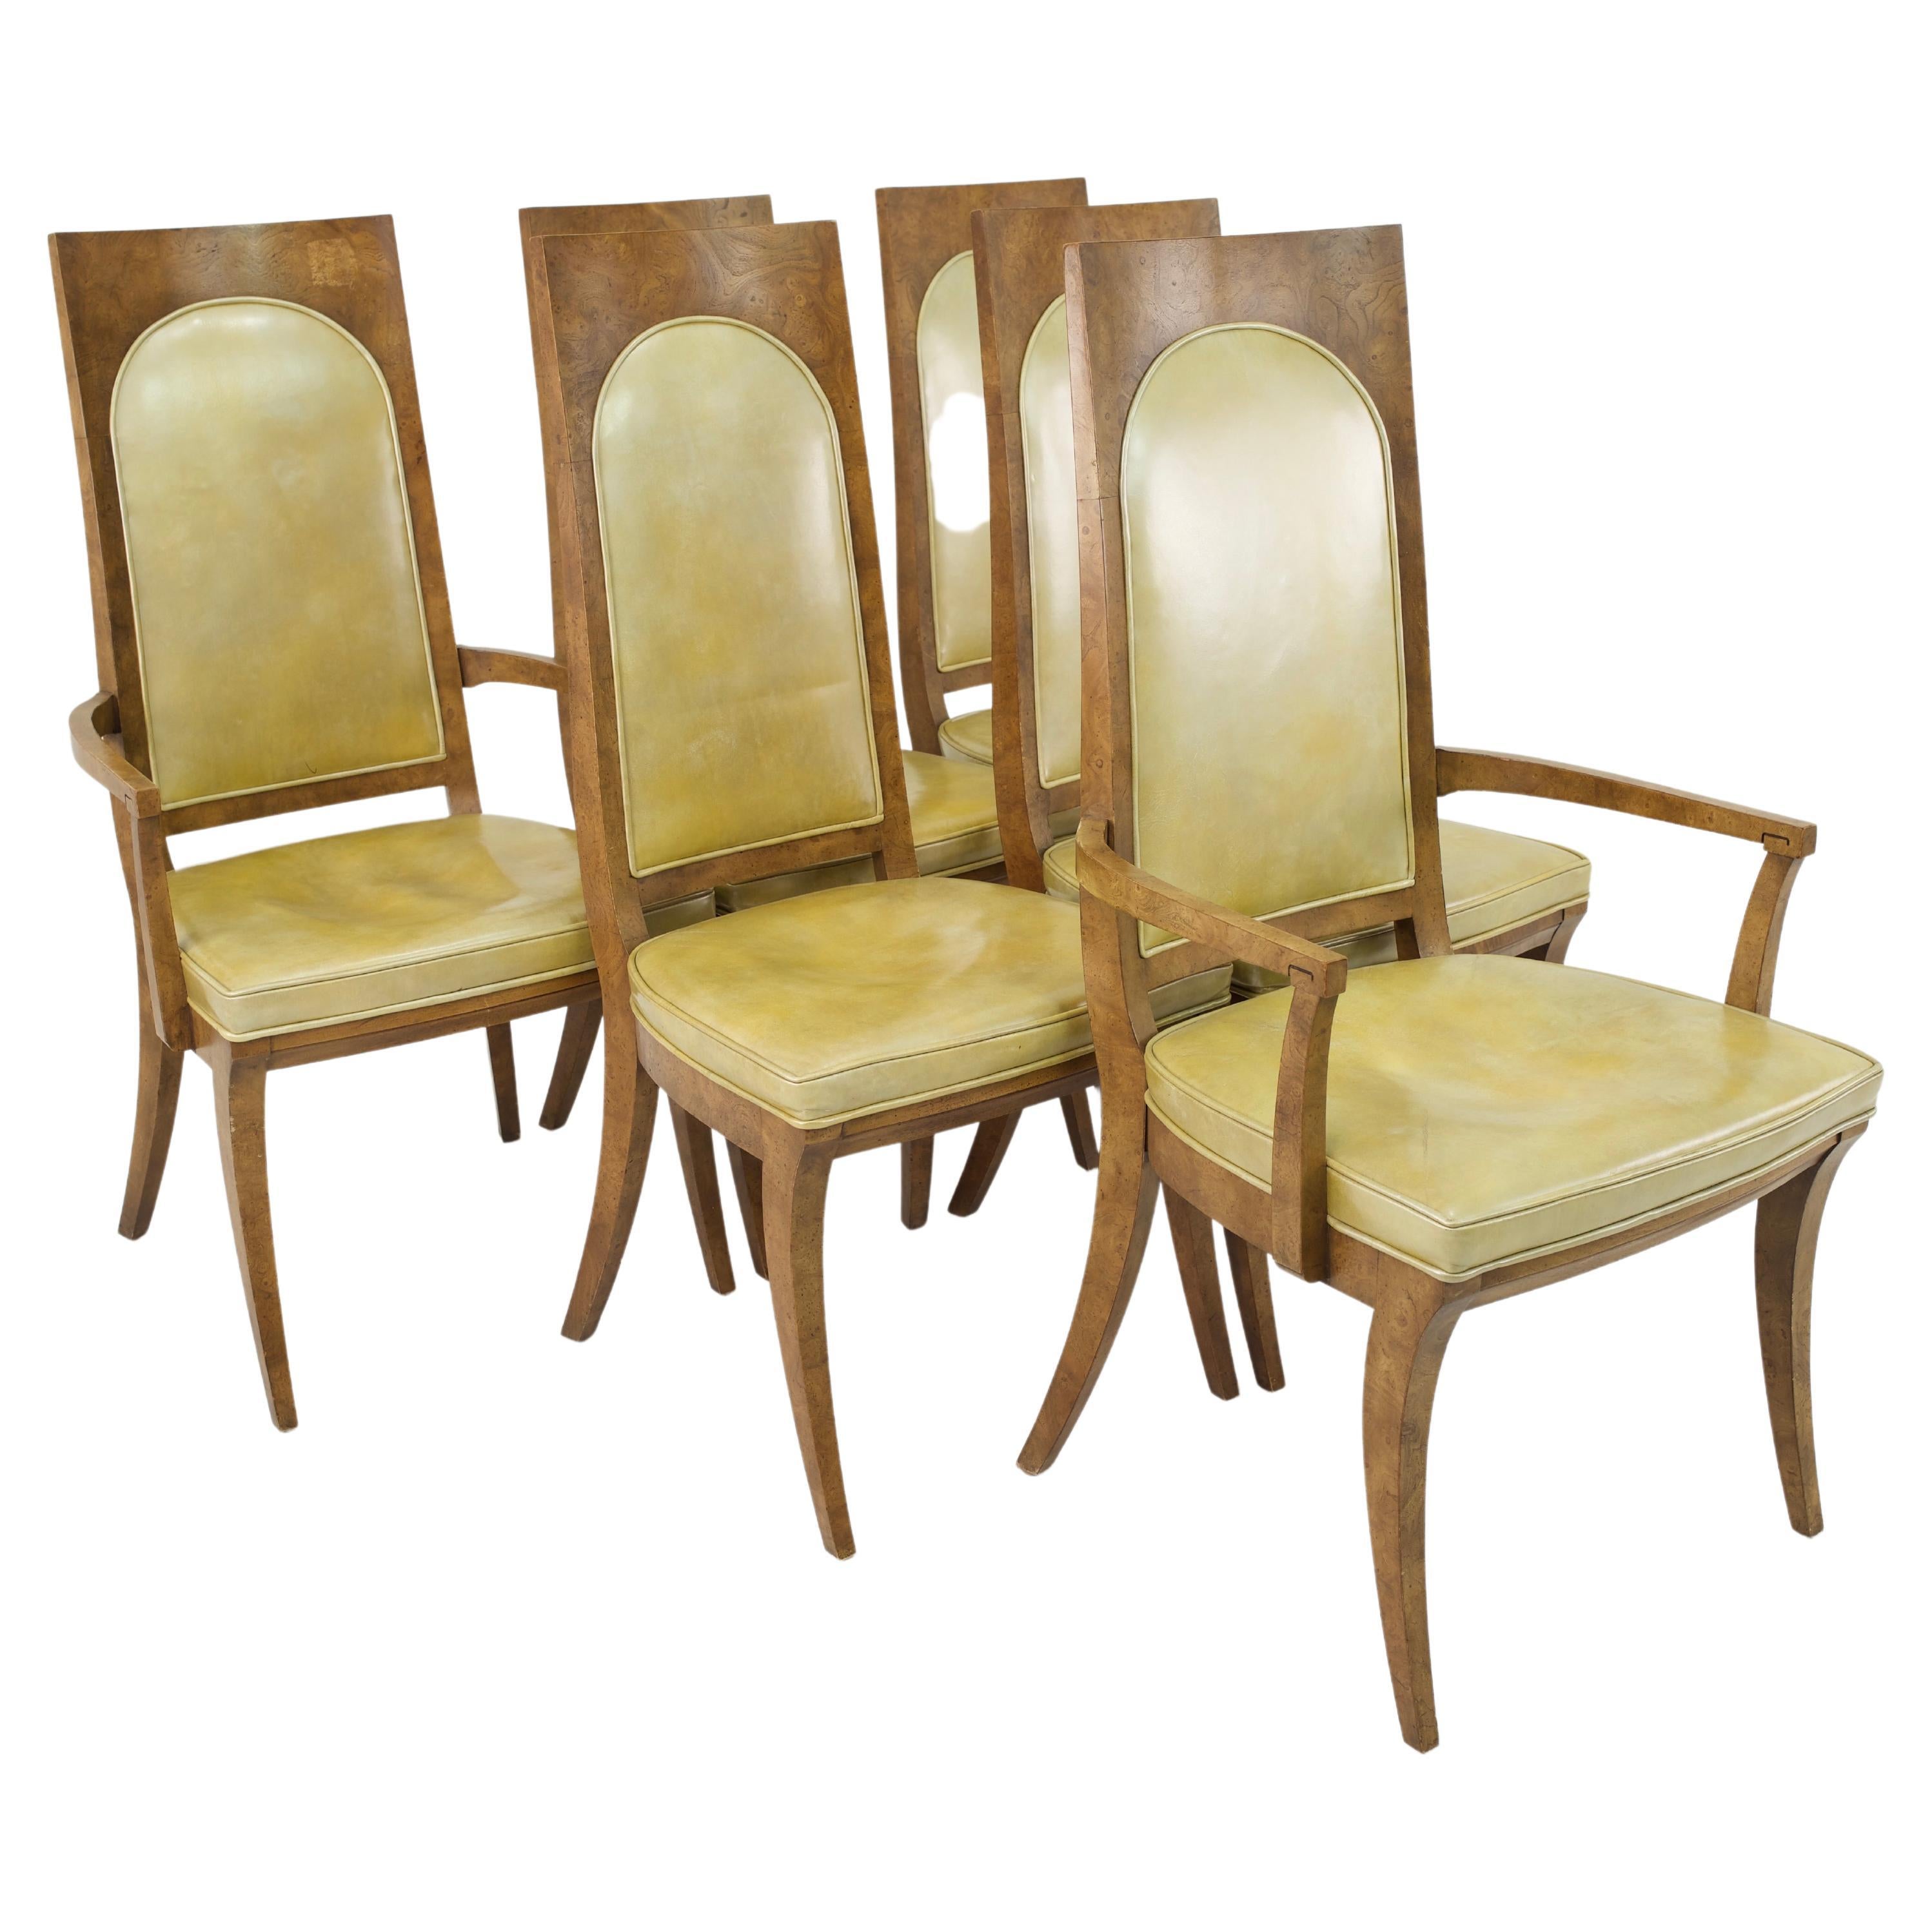 Mastercraft Mid Century Burlwood Dining Chairs - Set of 6